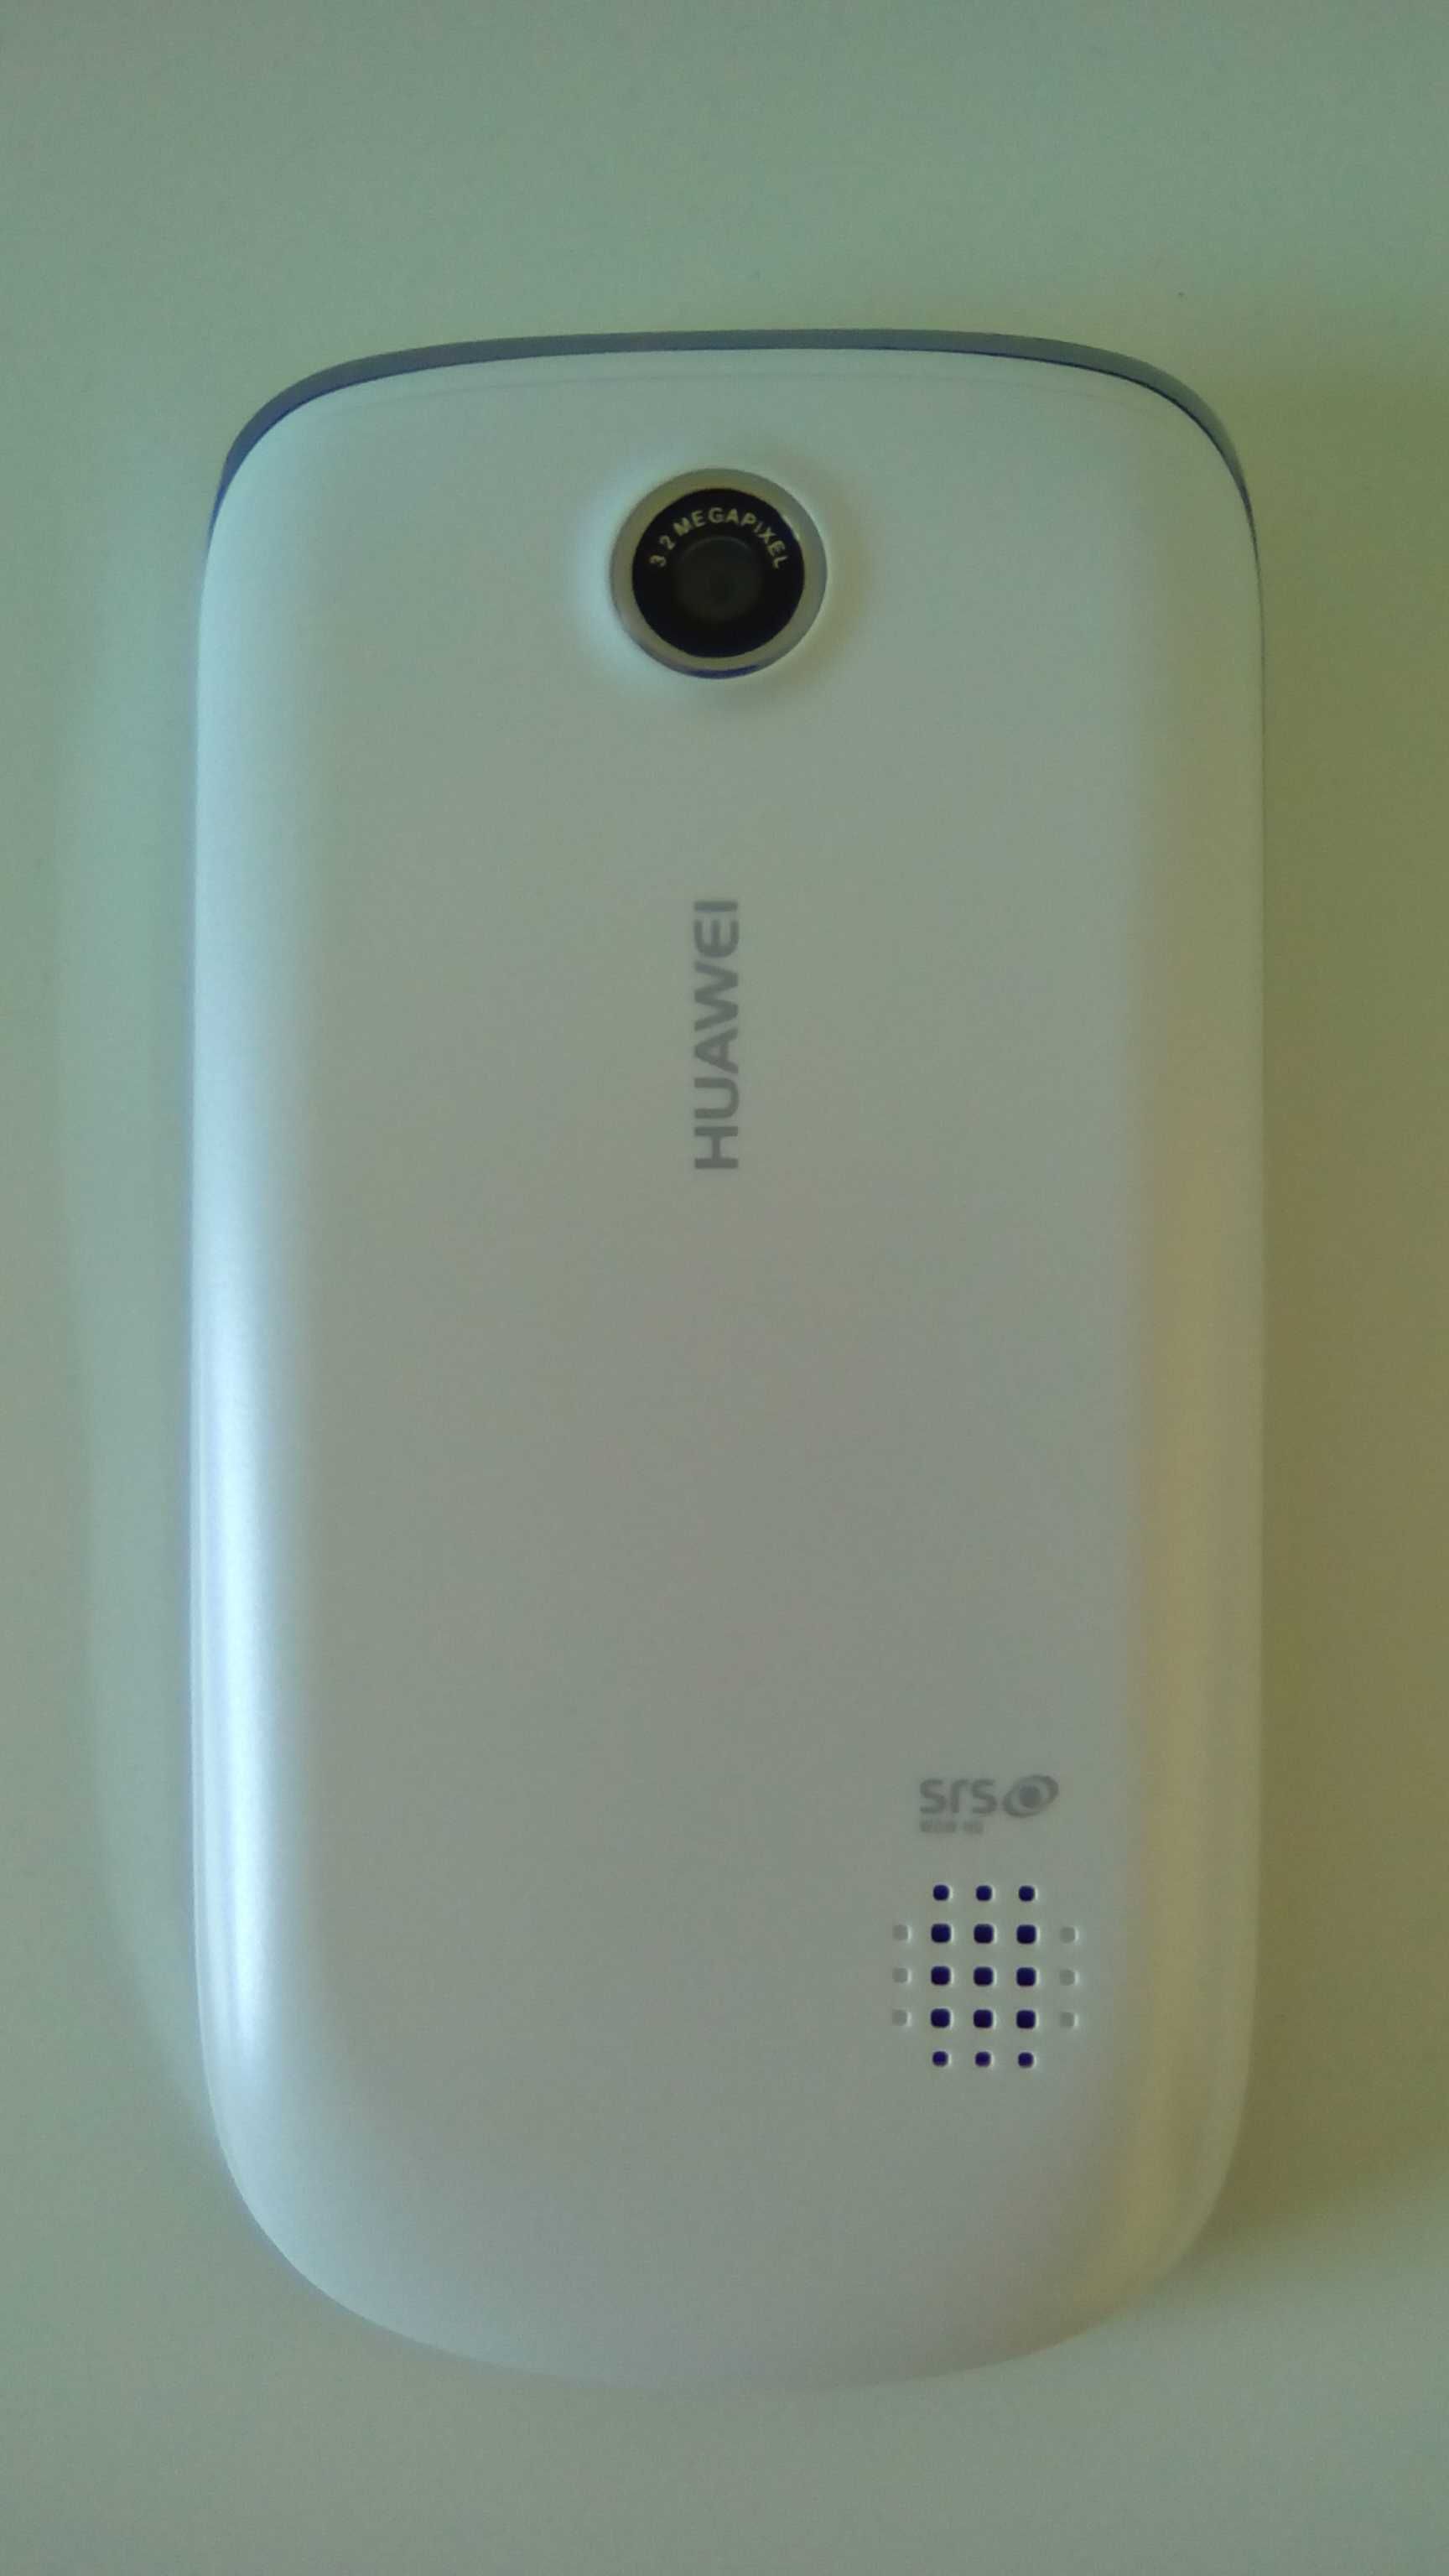 Telemóvel Huawei rede Vodafone